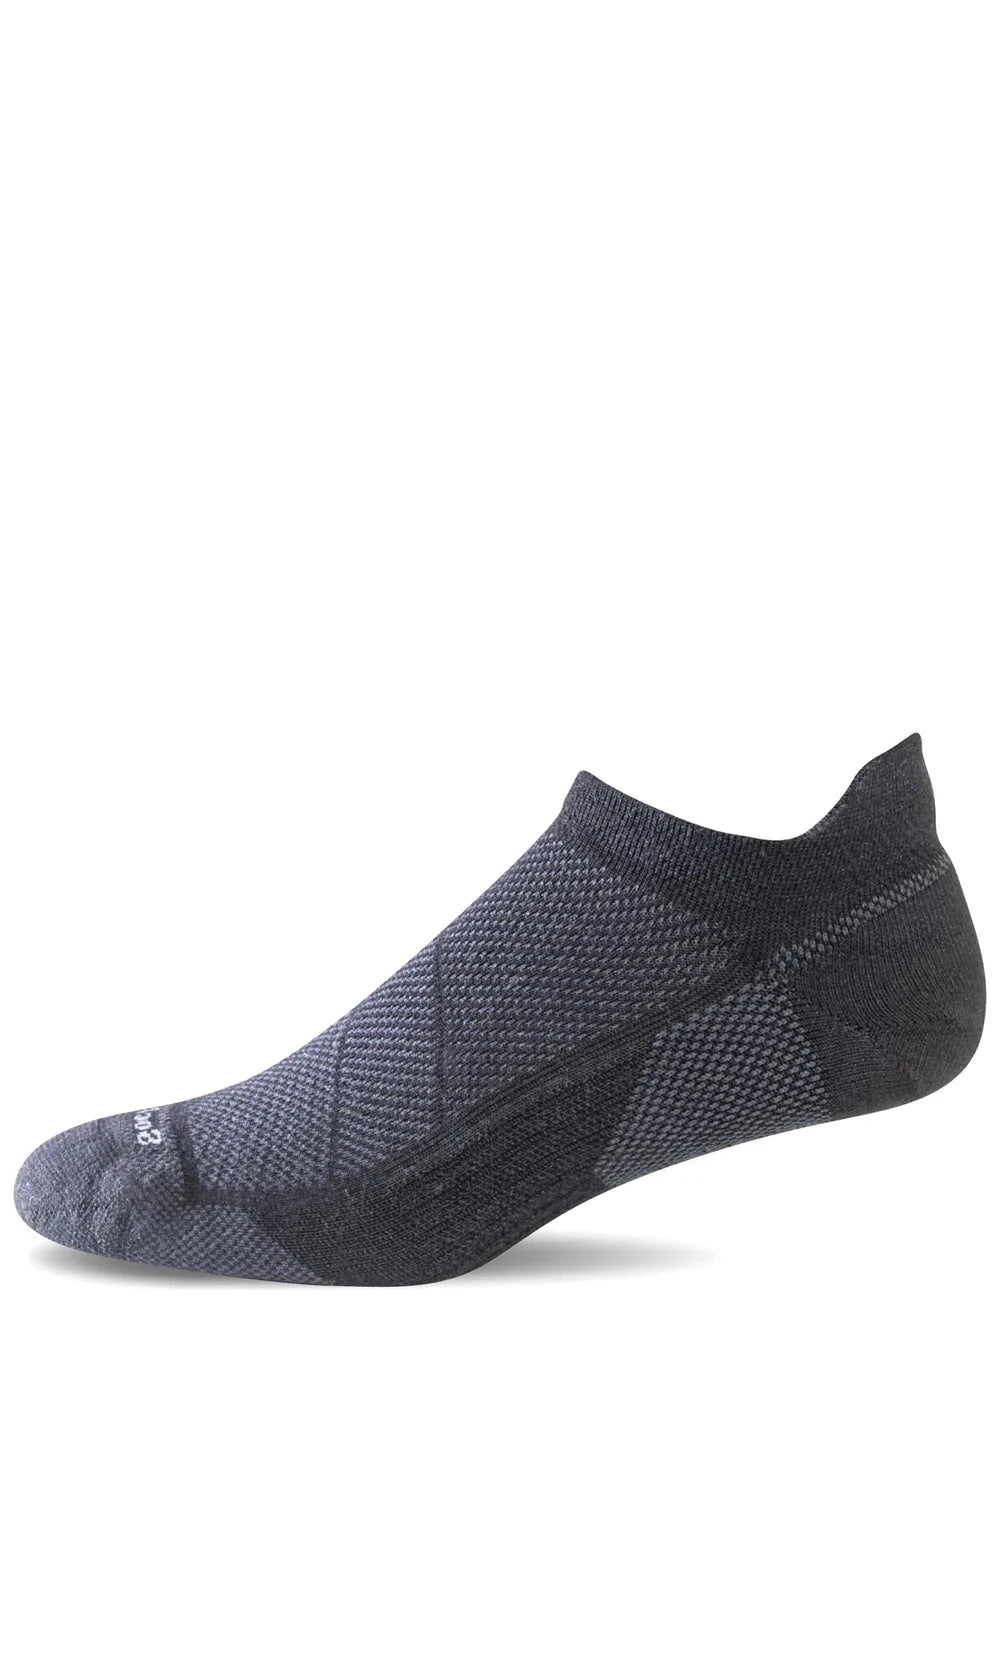 Elevate Micro | Compression | Men | Black - Socks - Sockwell